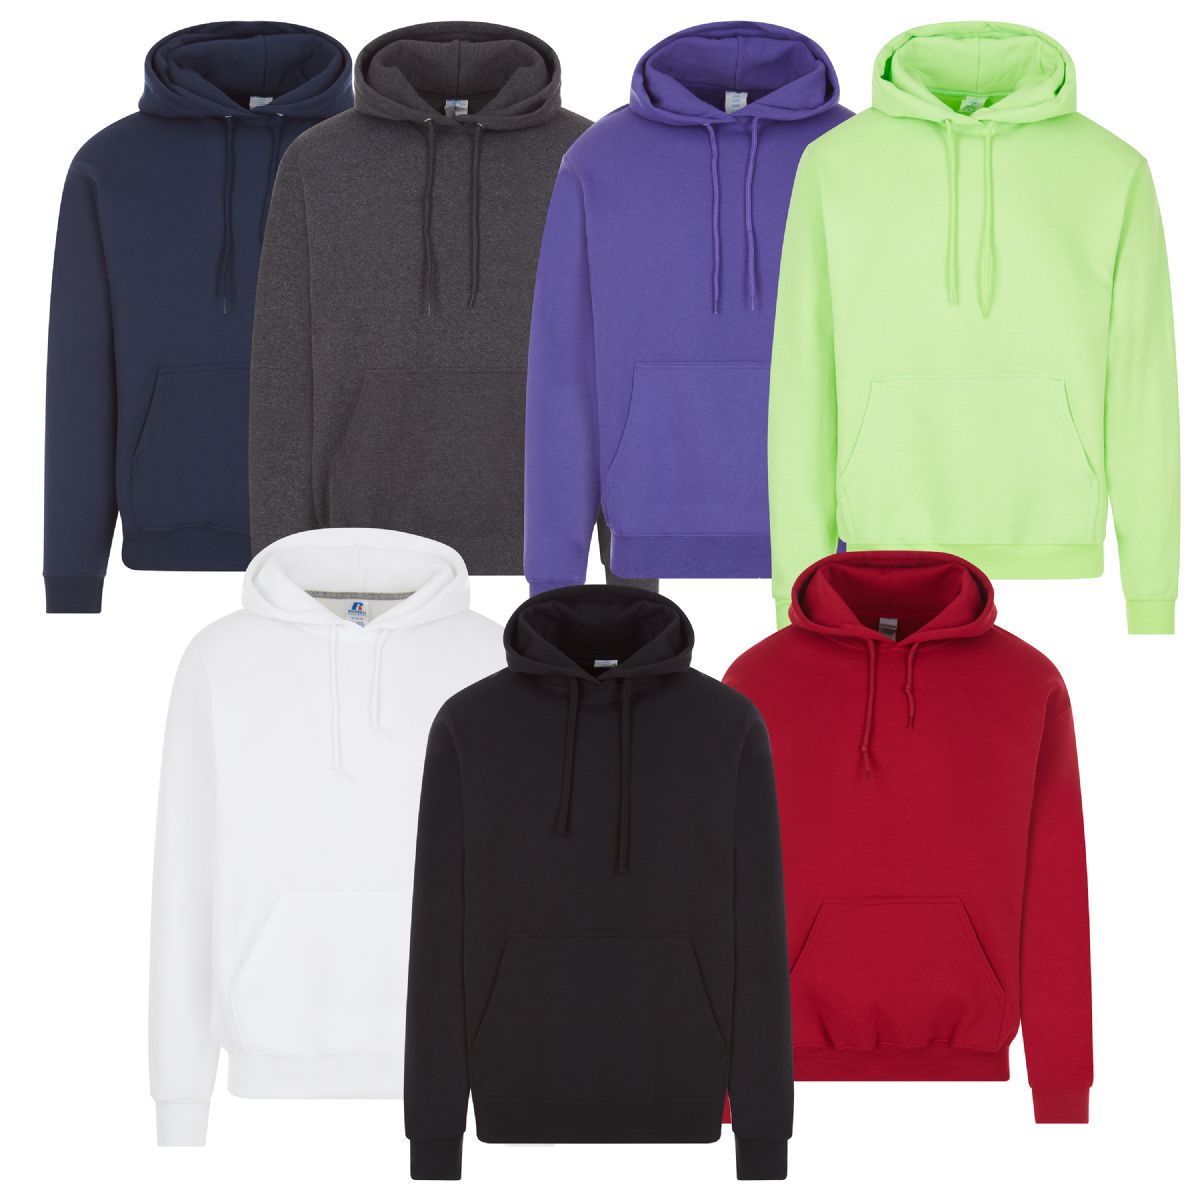 24 Wholesale Unisex Irregular Cotton Hoodie Sweatshirt In Assorted Colors X-Large